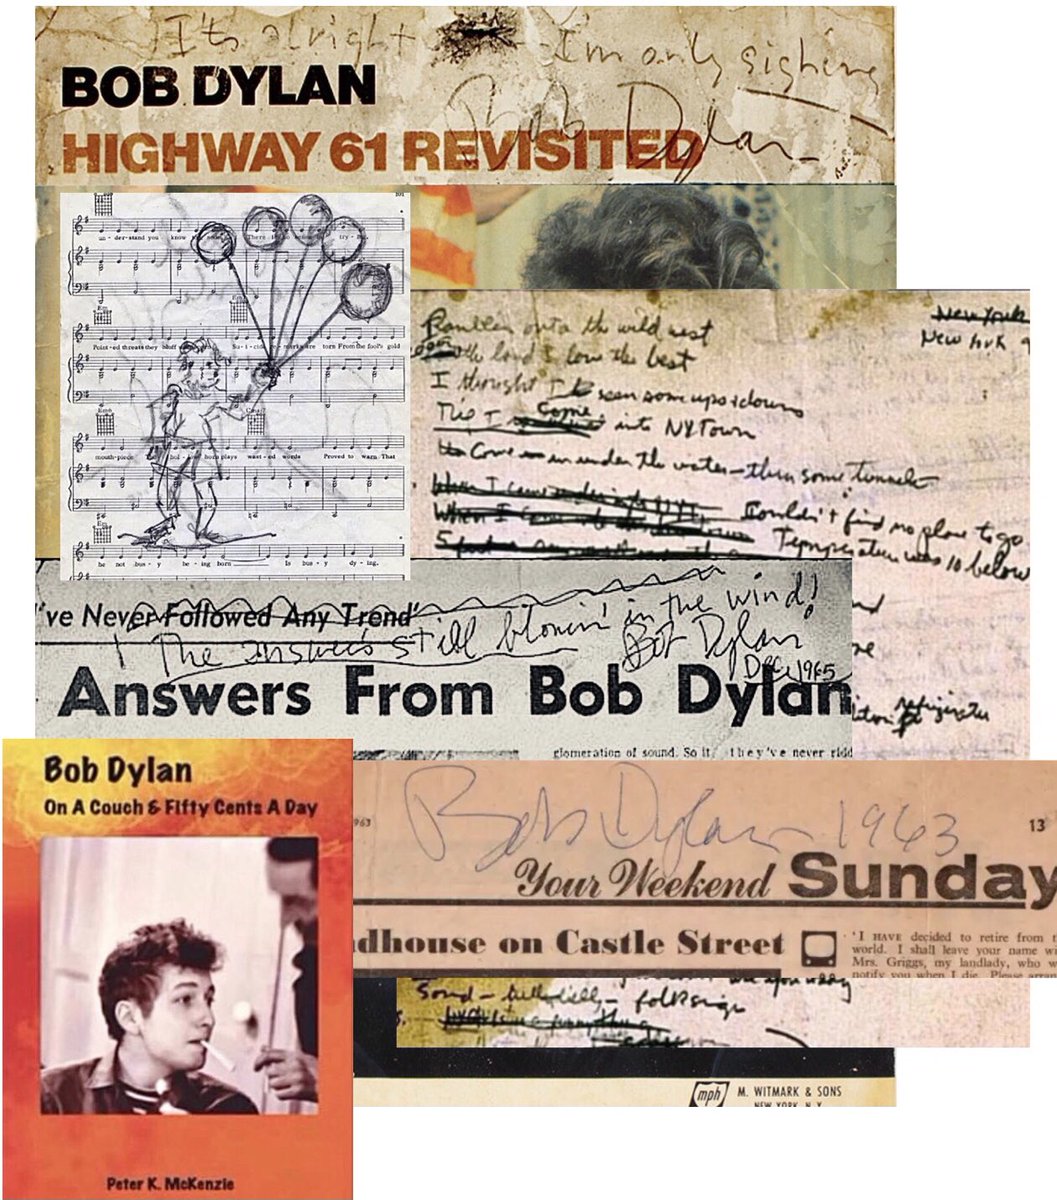 MY BOOK  
Click here for full description:amazon.com/dp/B09BDXC2VR

#BobDylan #Dylan #@goodreads #DylanRadio #music #folkmusic #poetry #newyorkcity  #greenwichvillage @RollingStone @harryhew #author #podcast @carolynhester